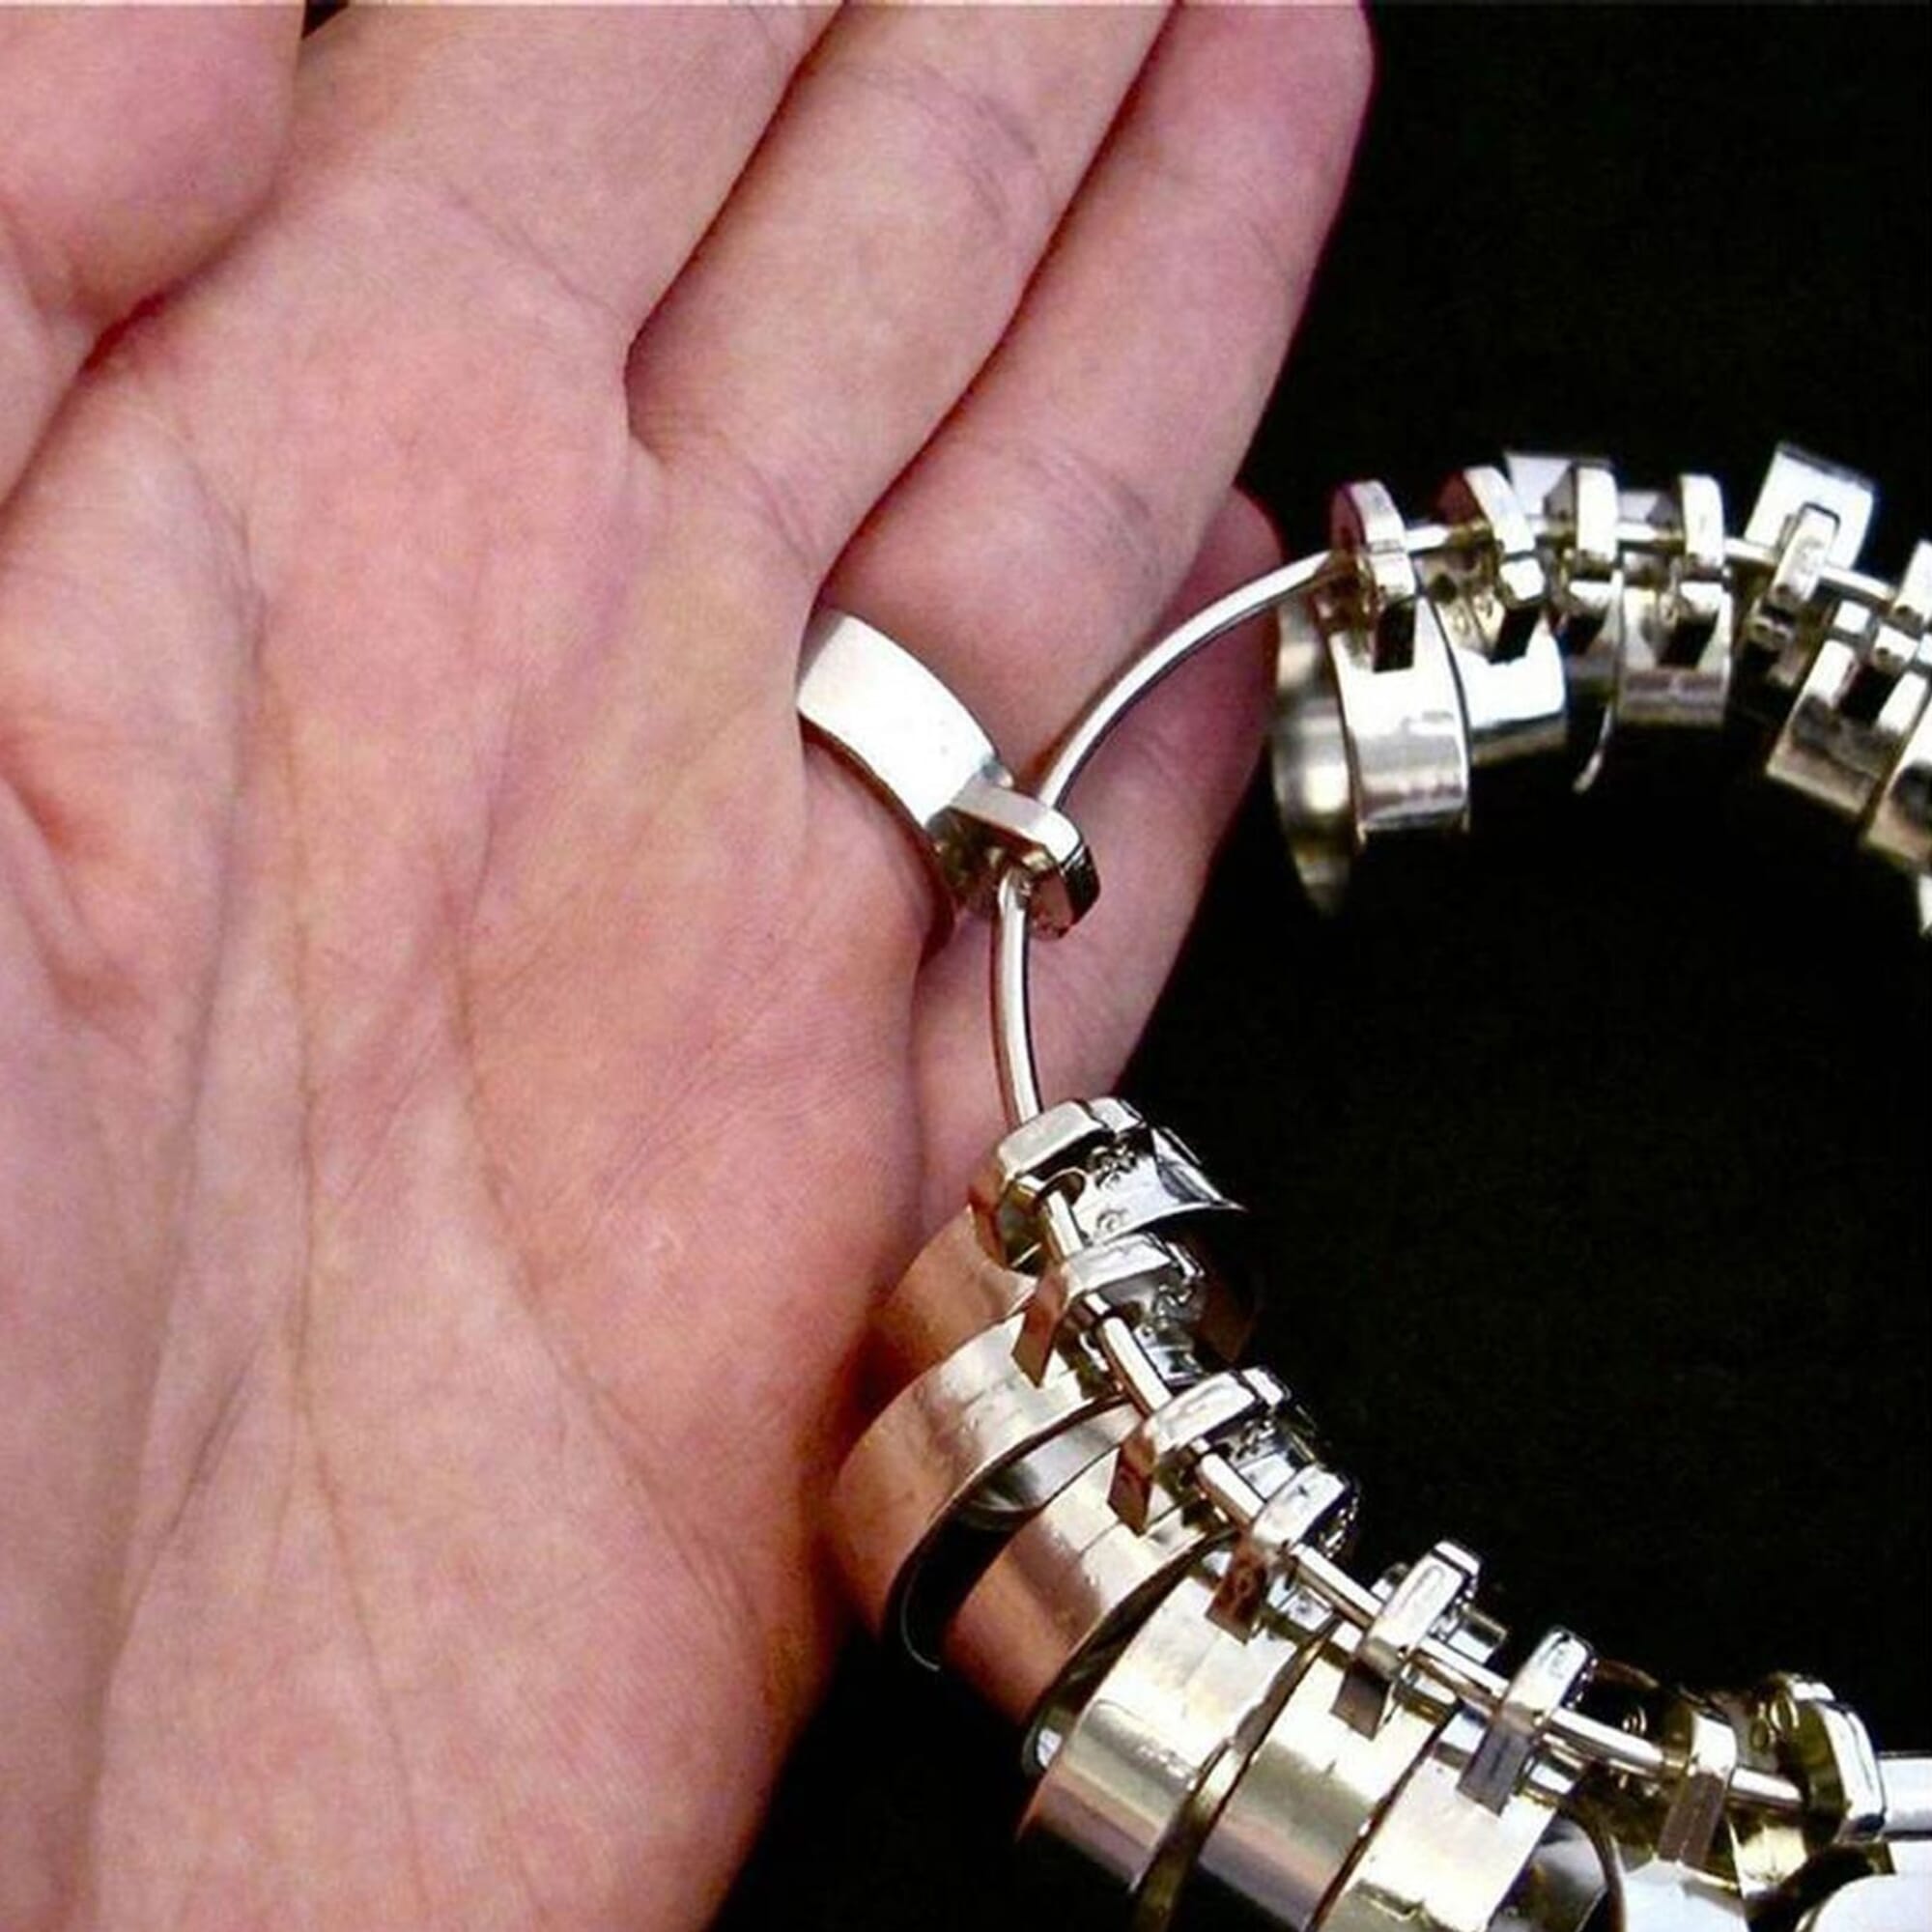 Nitto Gakku Metal Finger Gauge Jewelry Ring Sizer Measuring Tool Set, with Japanese Sizes 1-30, to Measure Ring Size